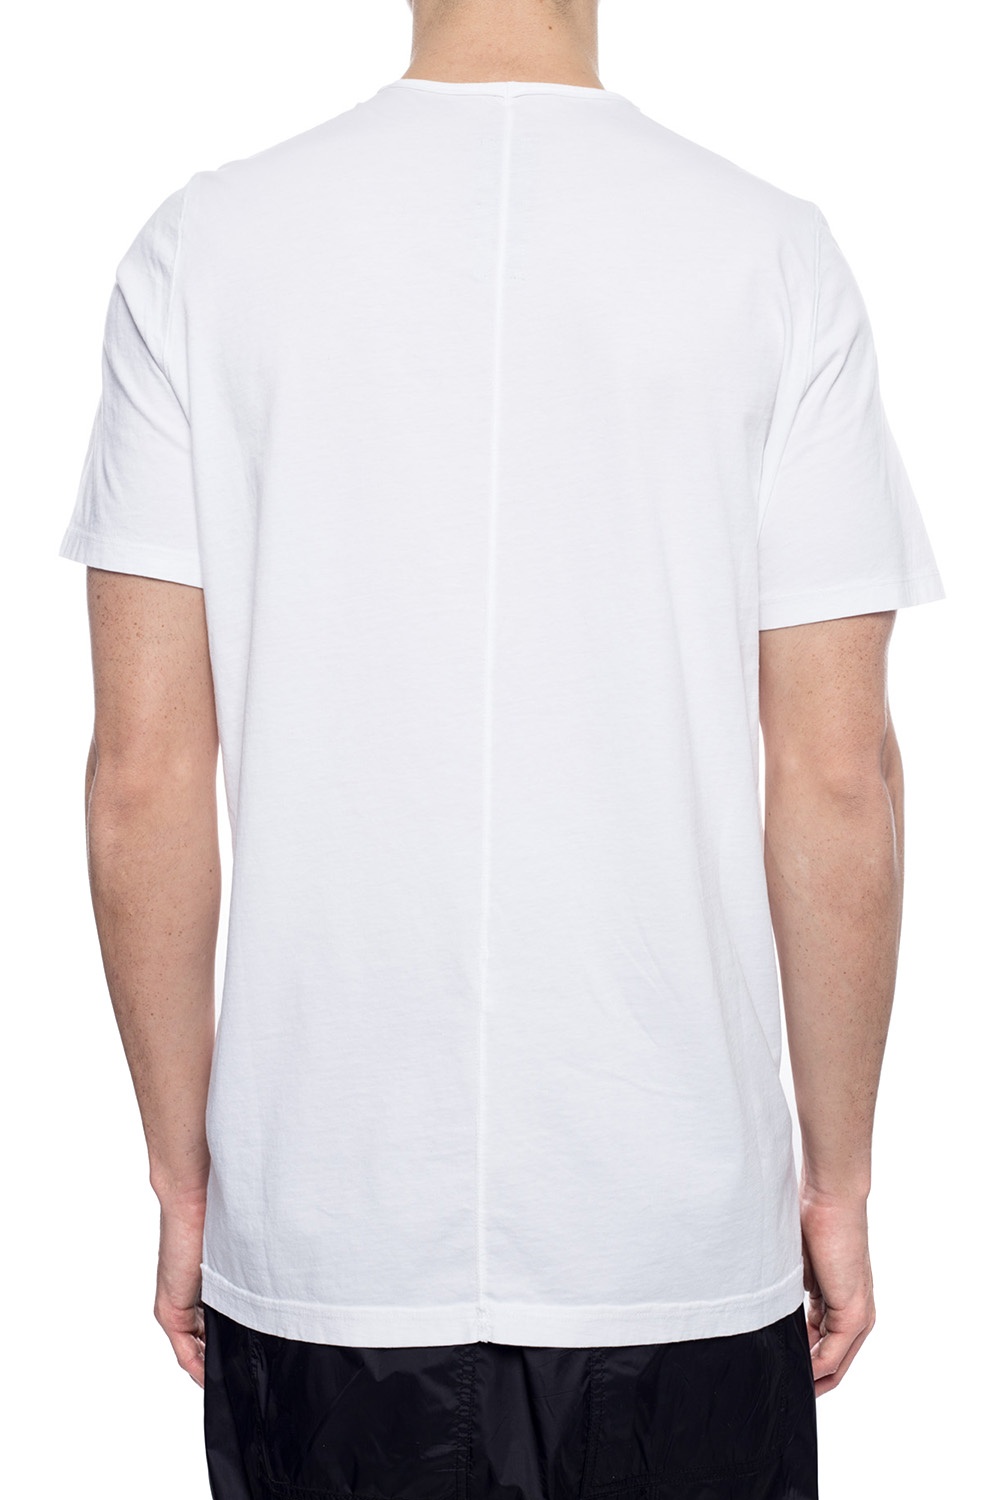 Basic Low Back Scooped Long Sleeve T-Shirt